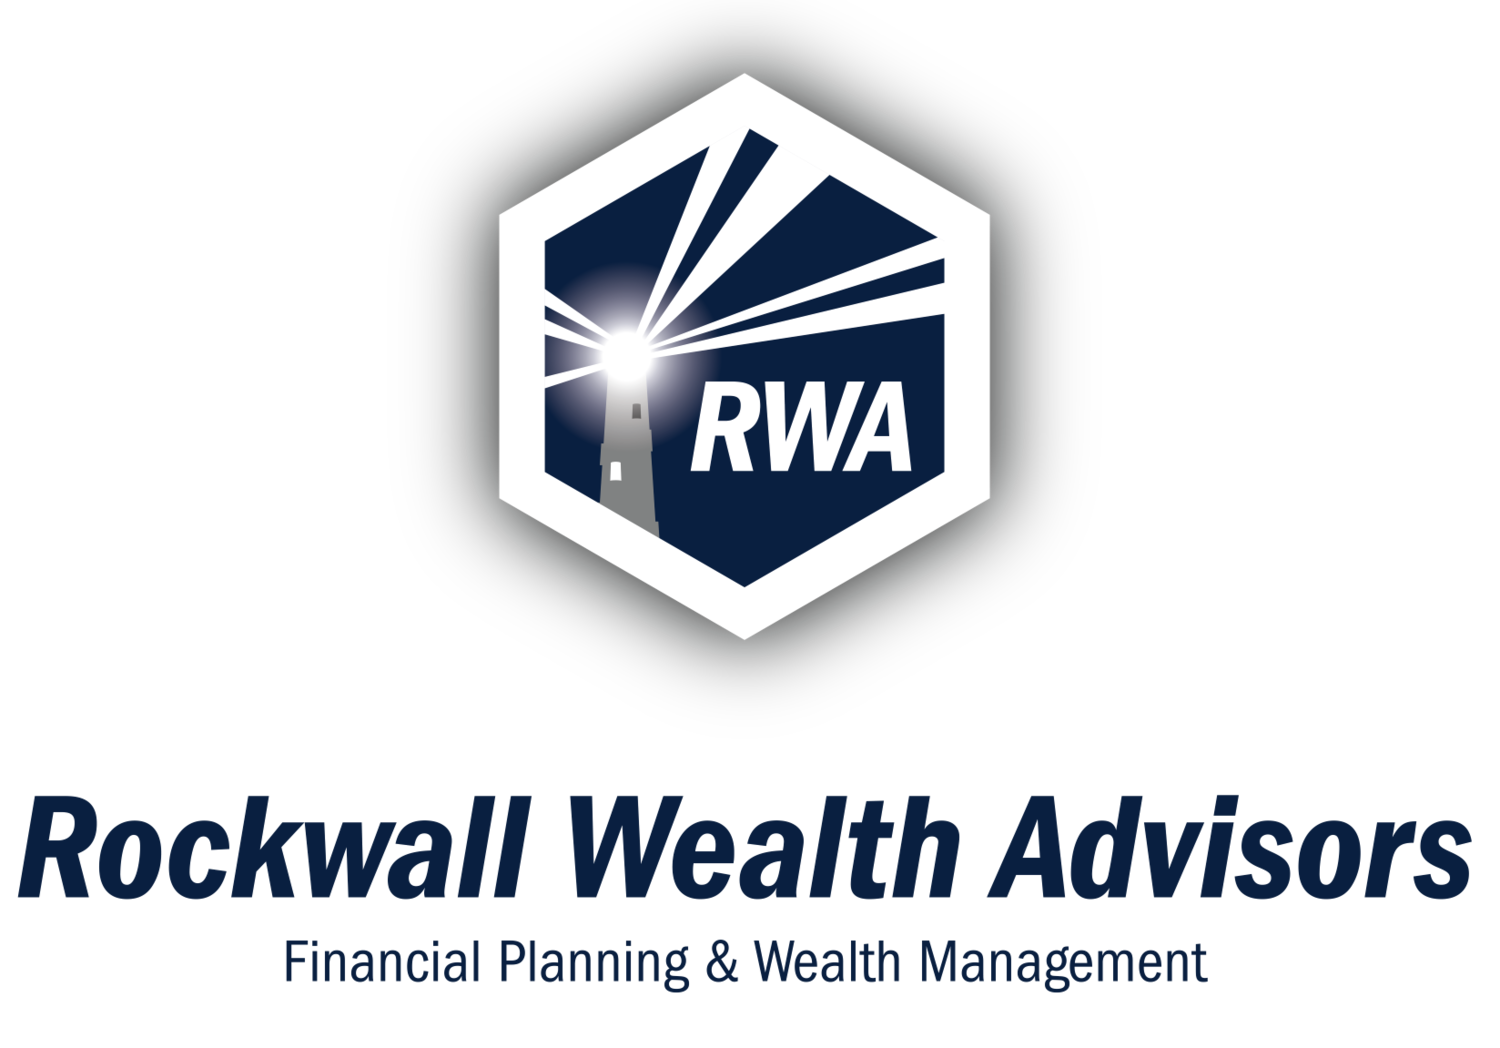 Rockwall Wealth Advisors 